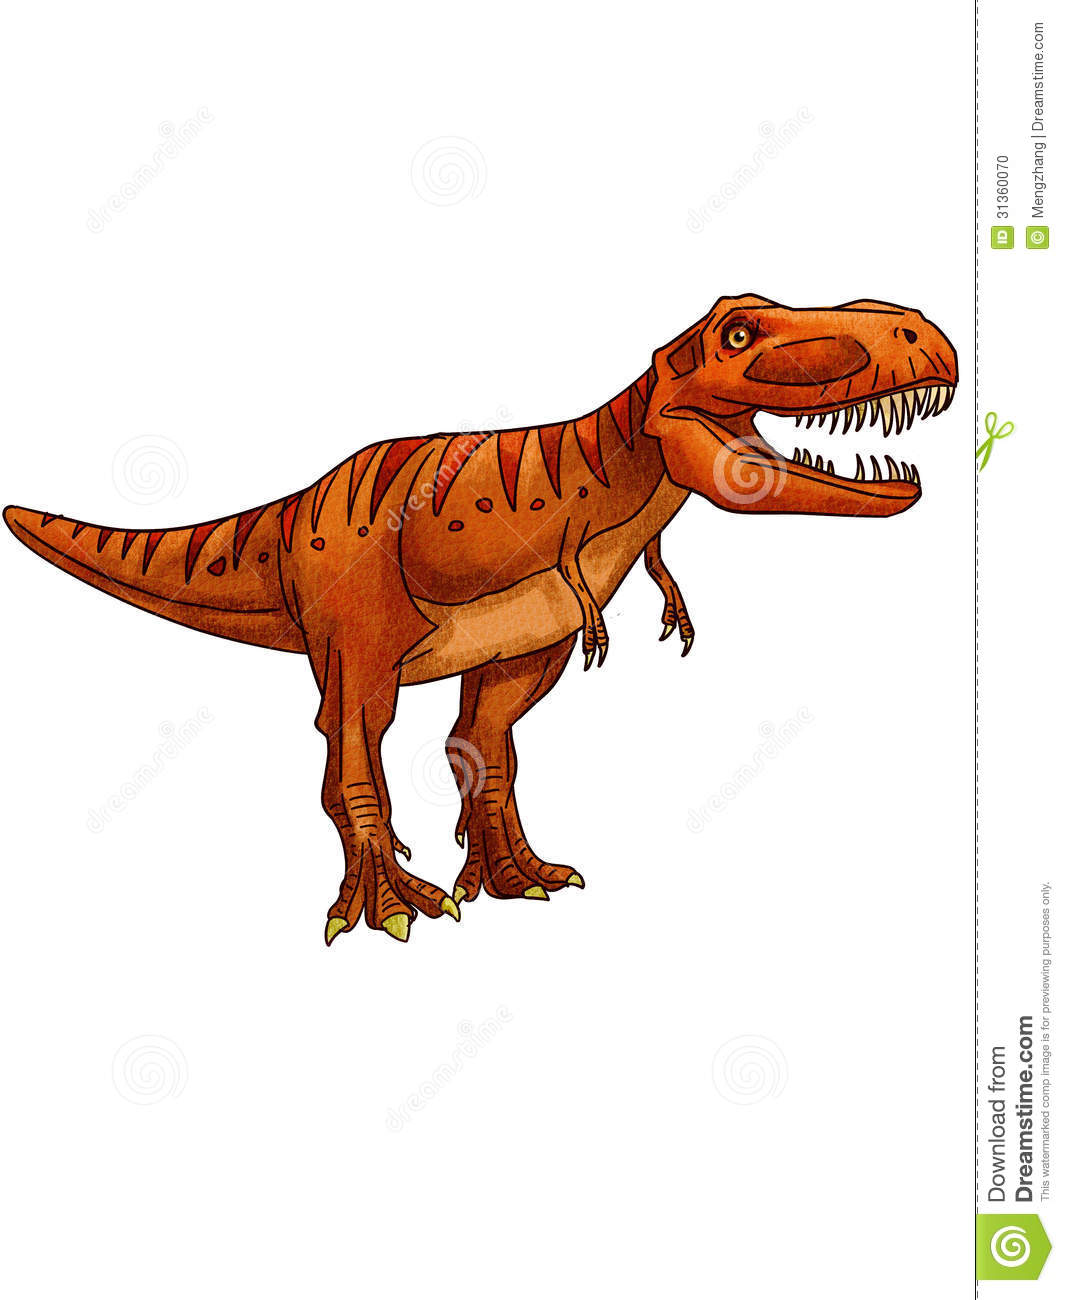 Dinosaur Tyrannosaurus It Has A Big Head And Sharp Teeth And Strong